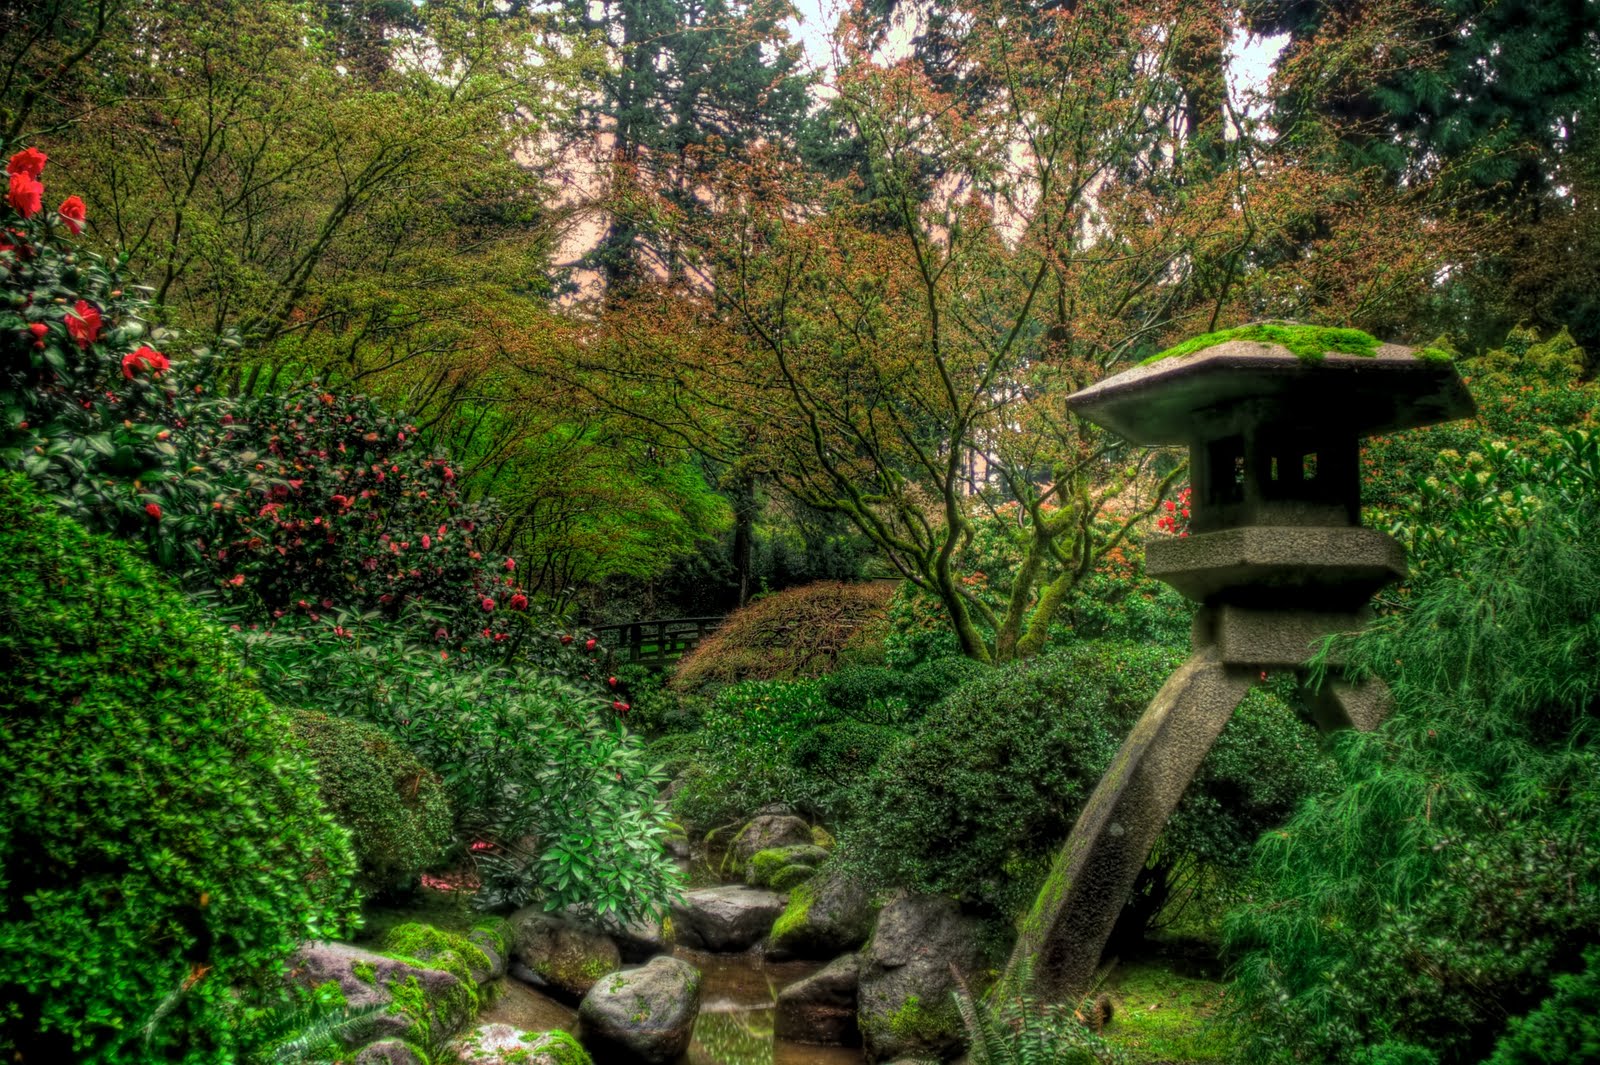 Portland Japanese Garden